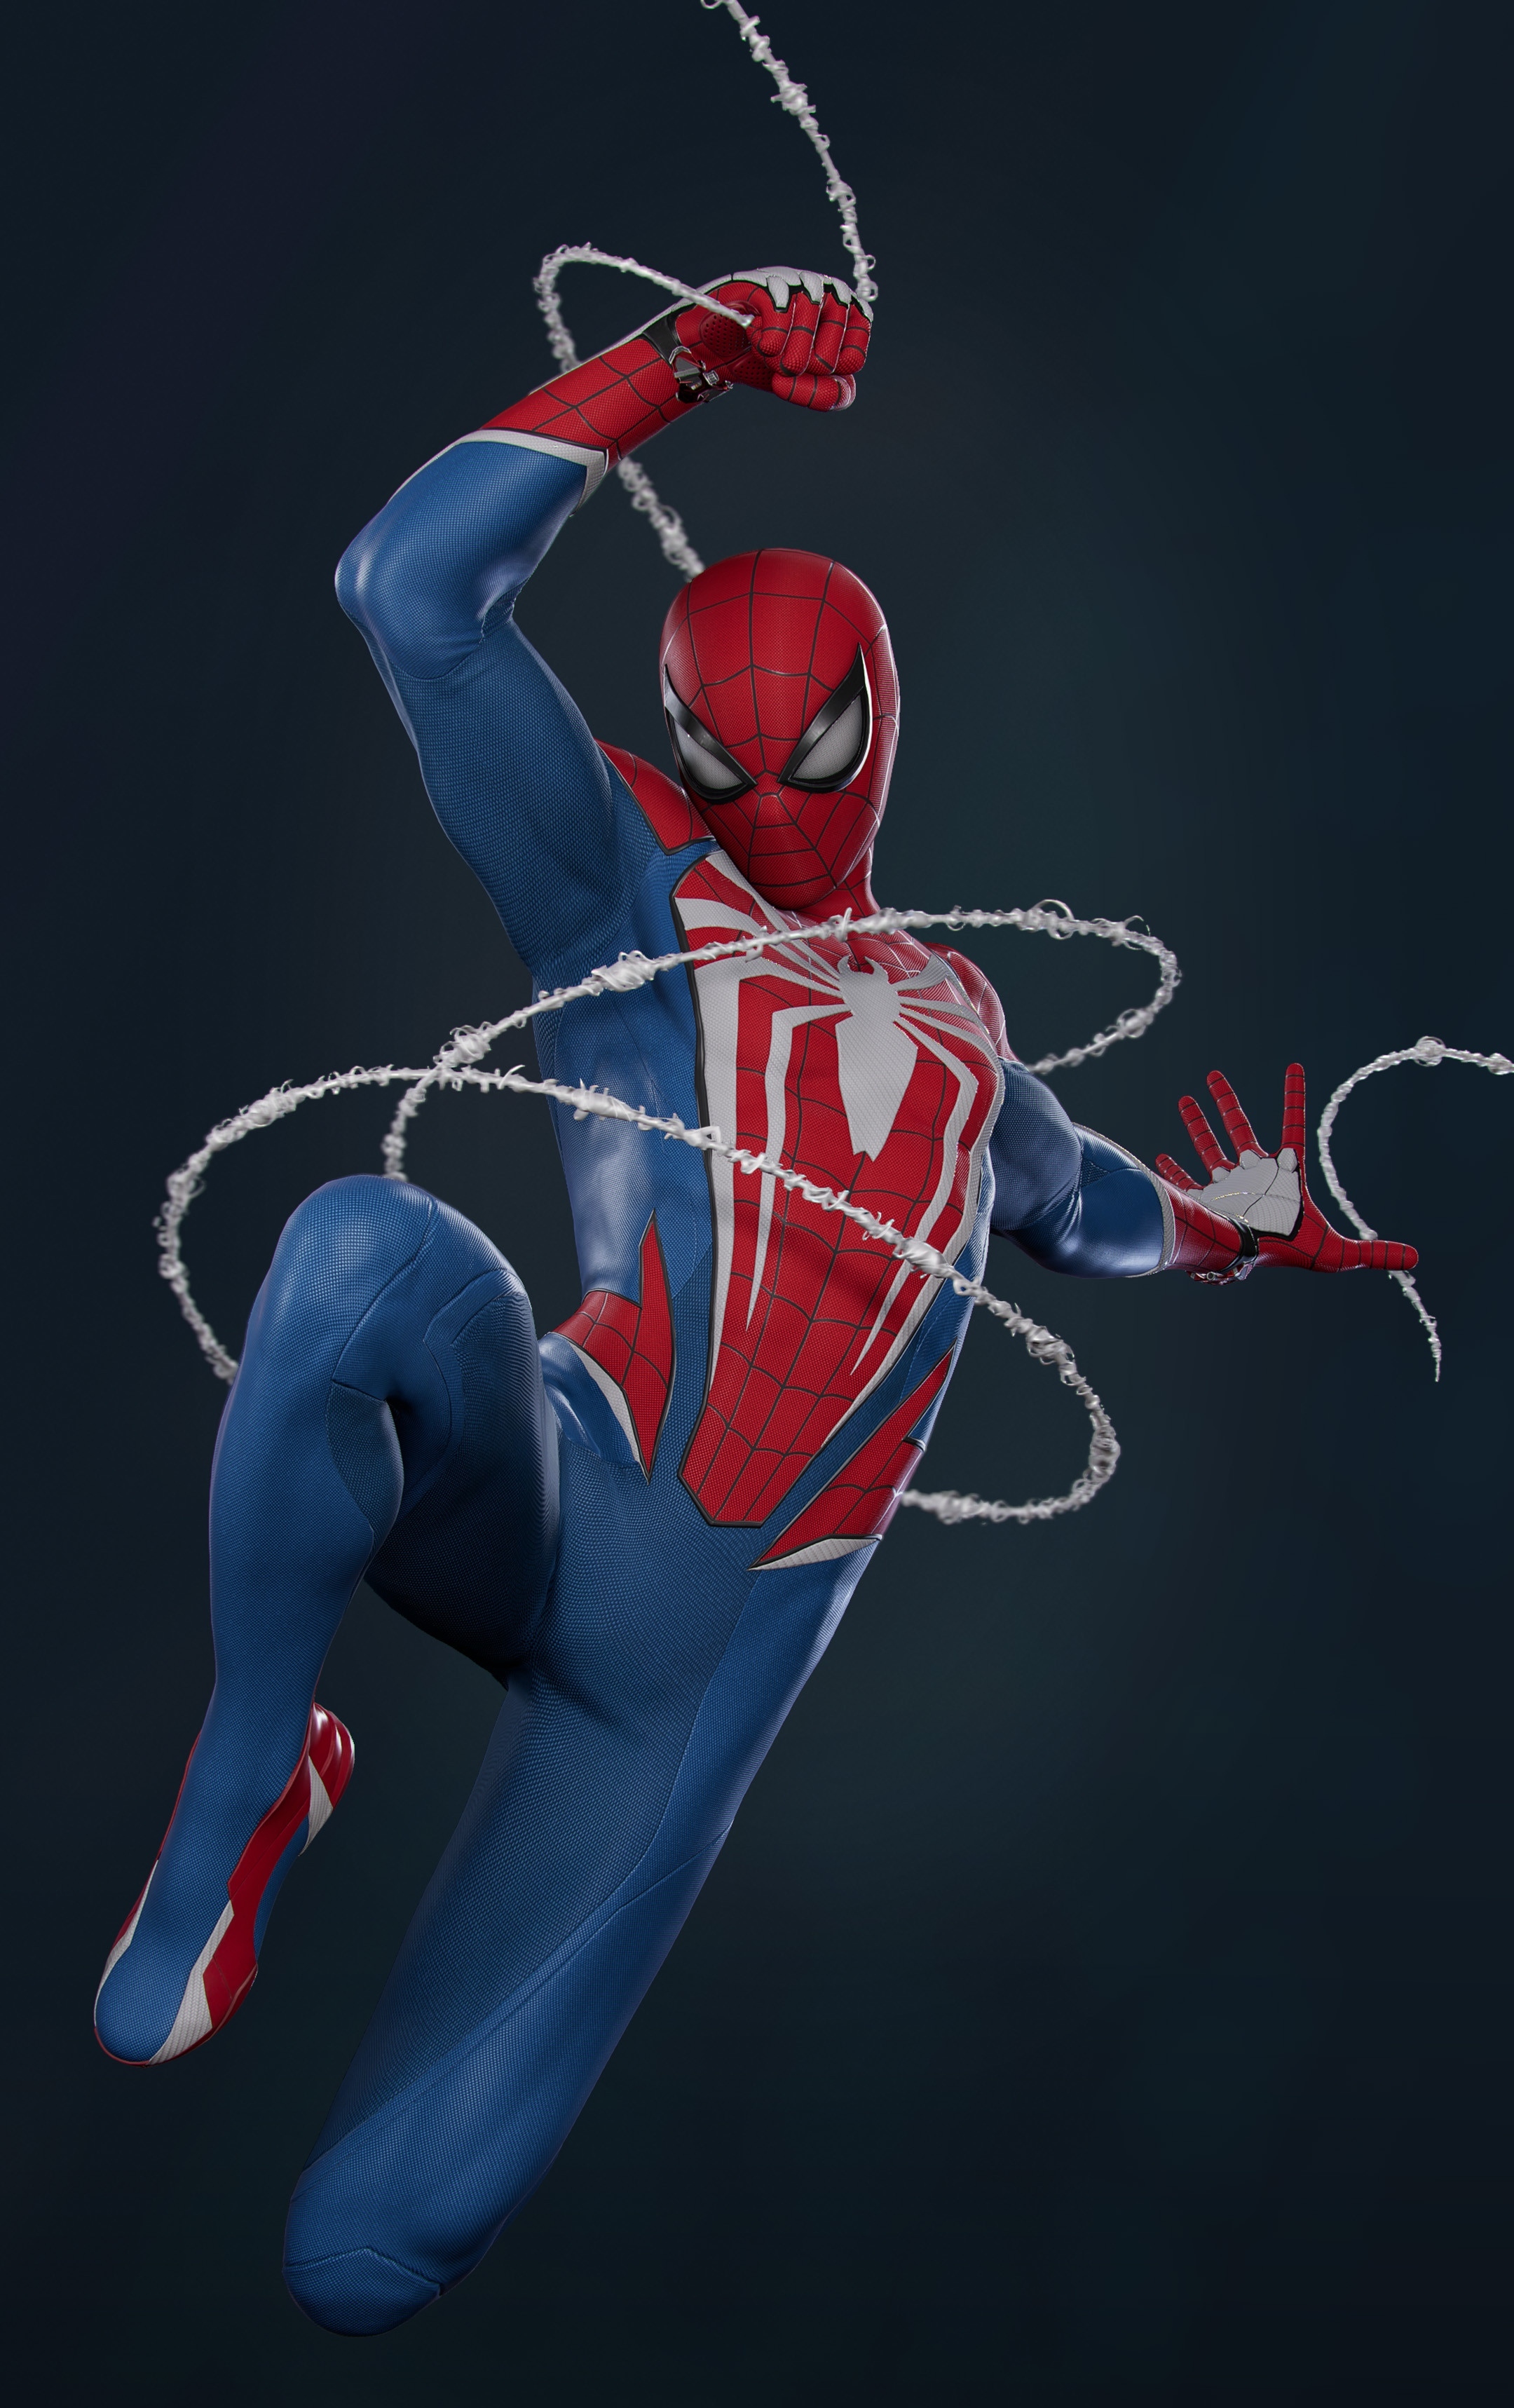 Spider-Man (2018 video game) - Wikipedia